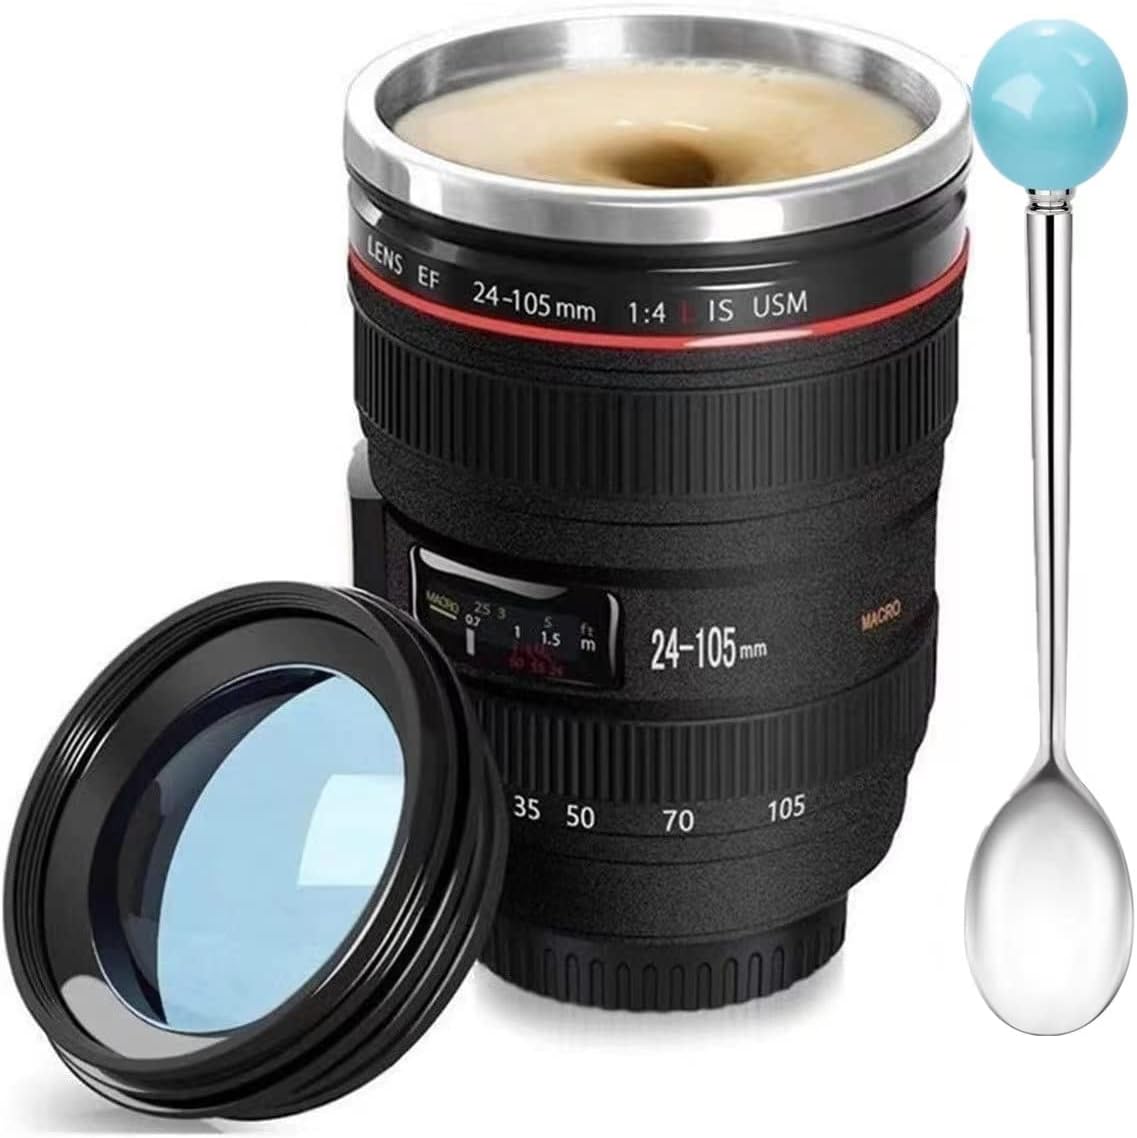 Camera Lens Coffee Mug - Fun and Great Gift for Photographers